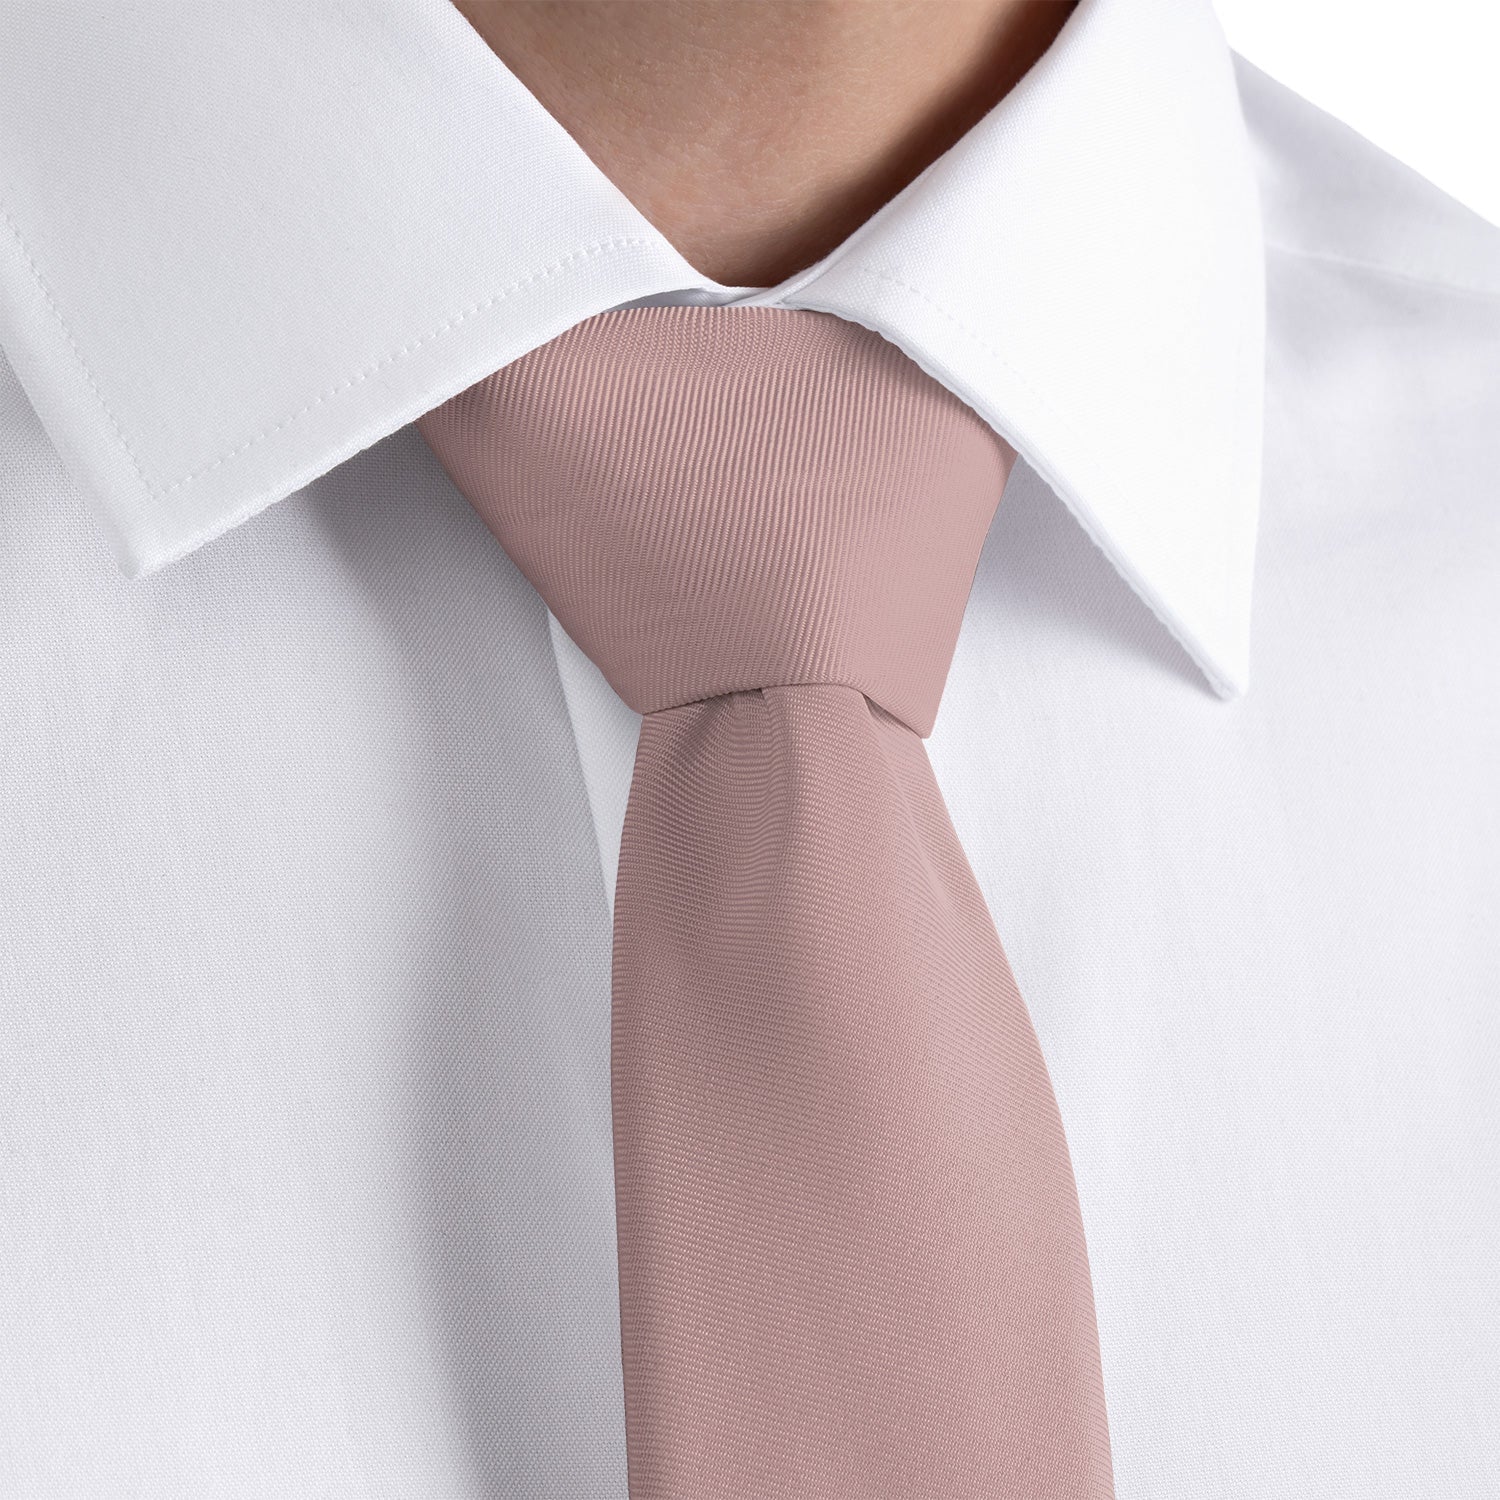 Azazie Dusty Rose Necktie - Rolled - Knotty Tie Co.